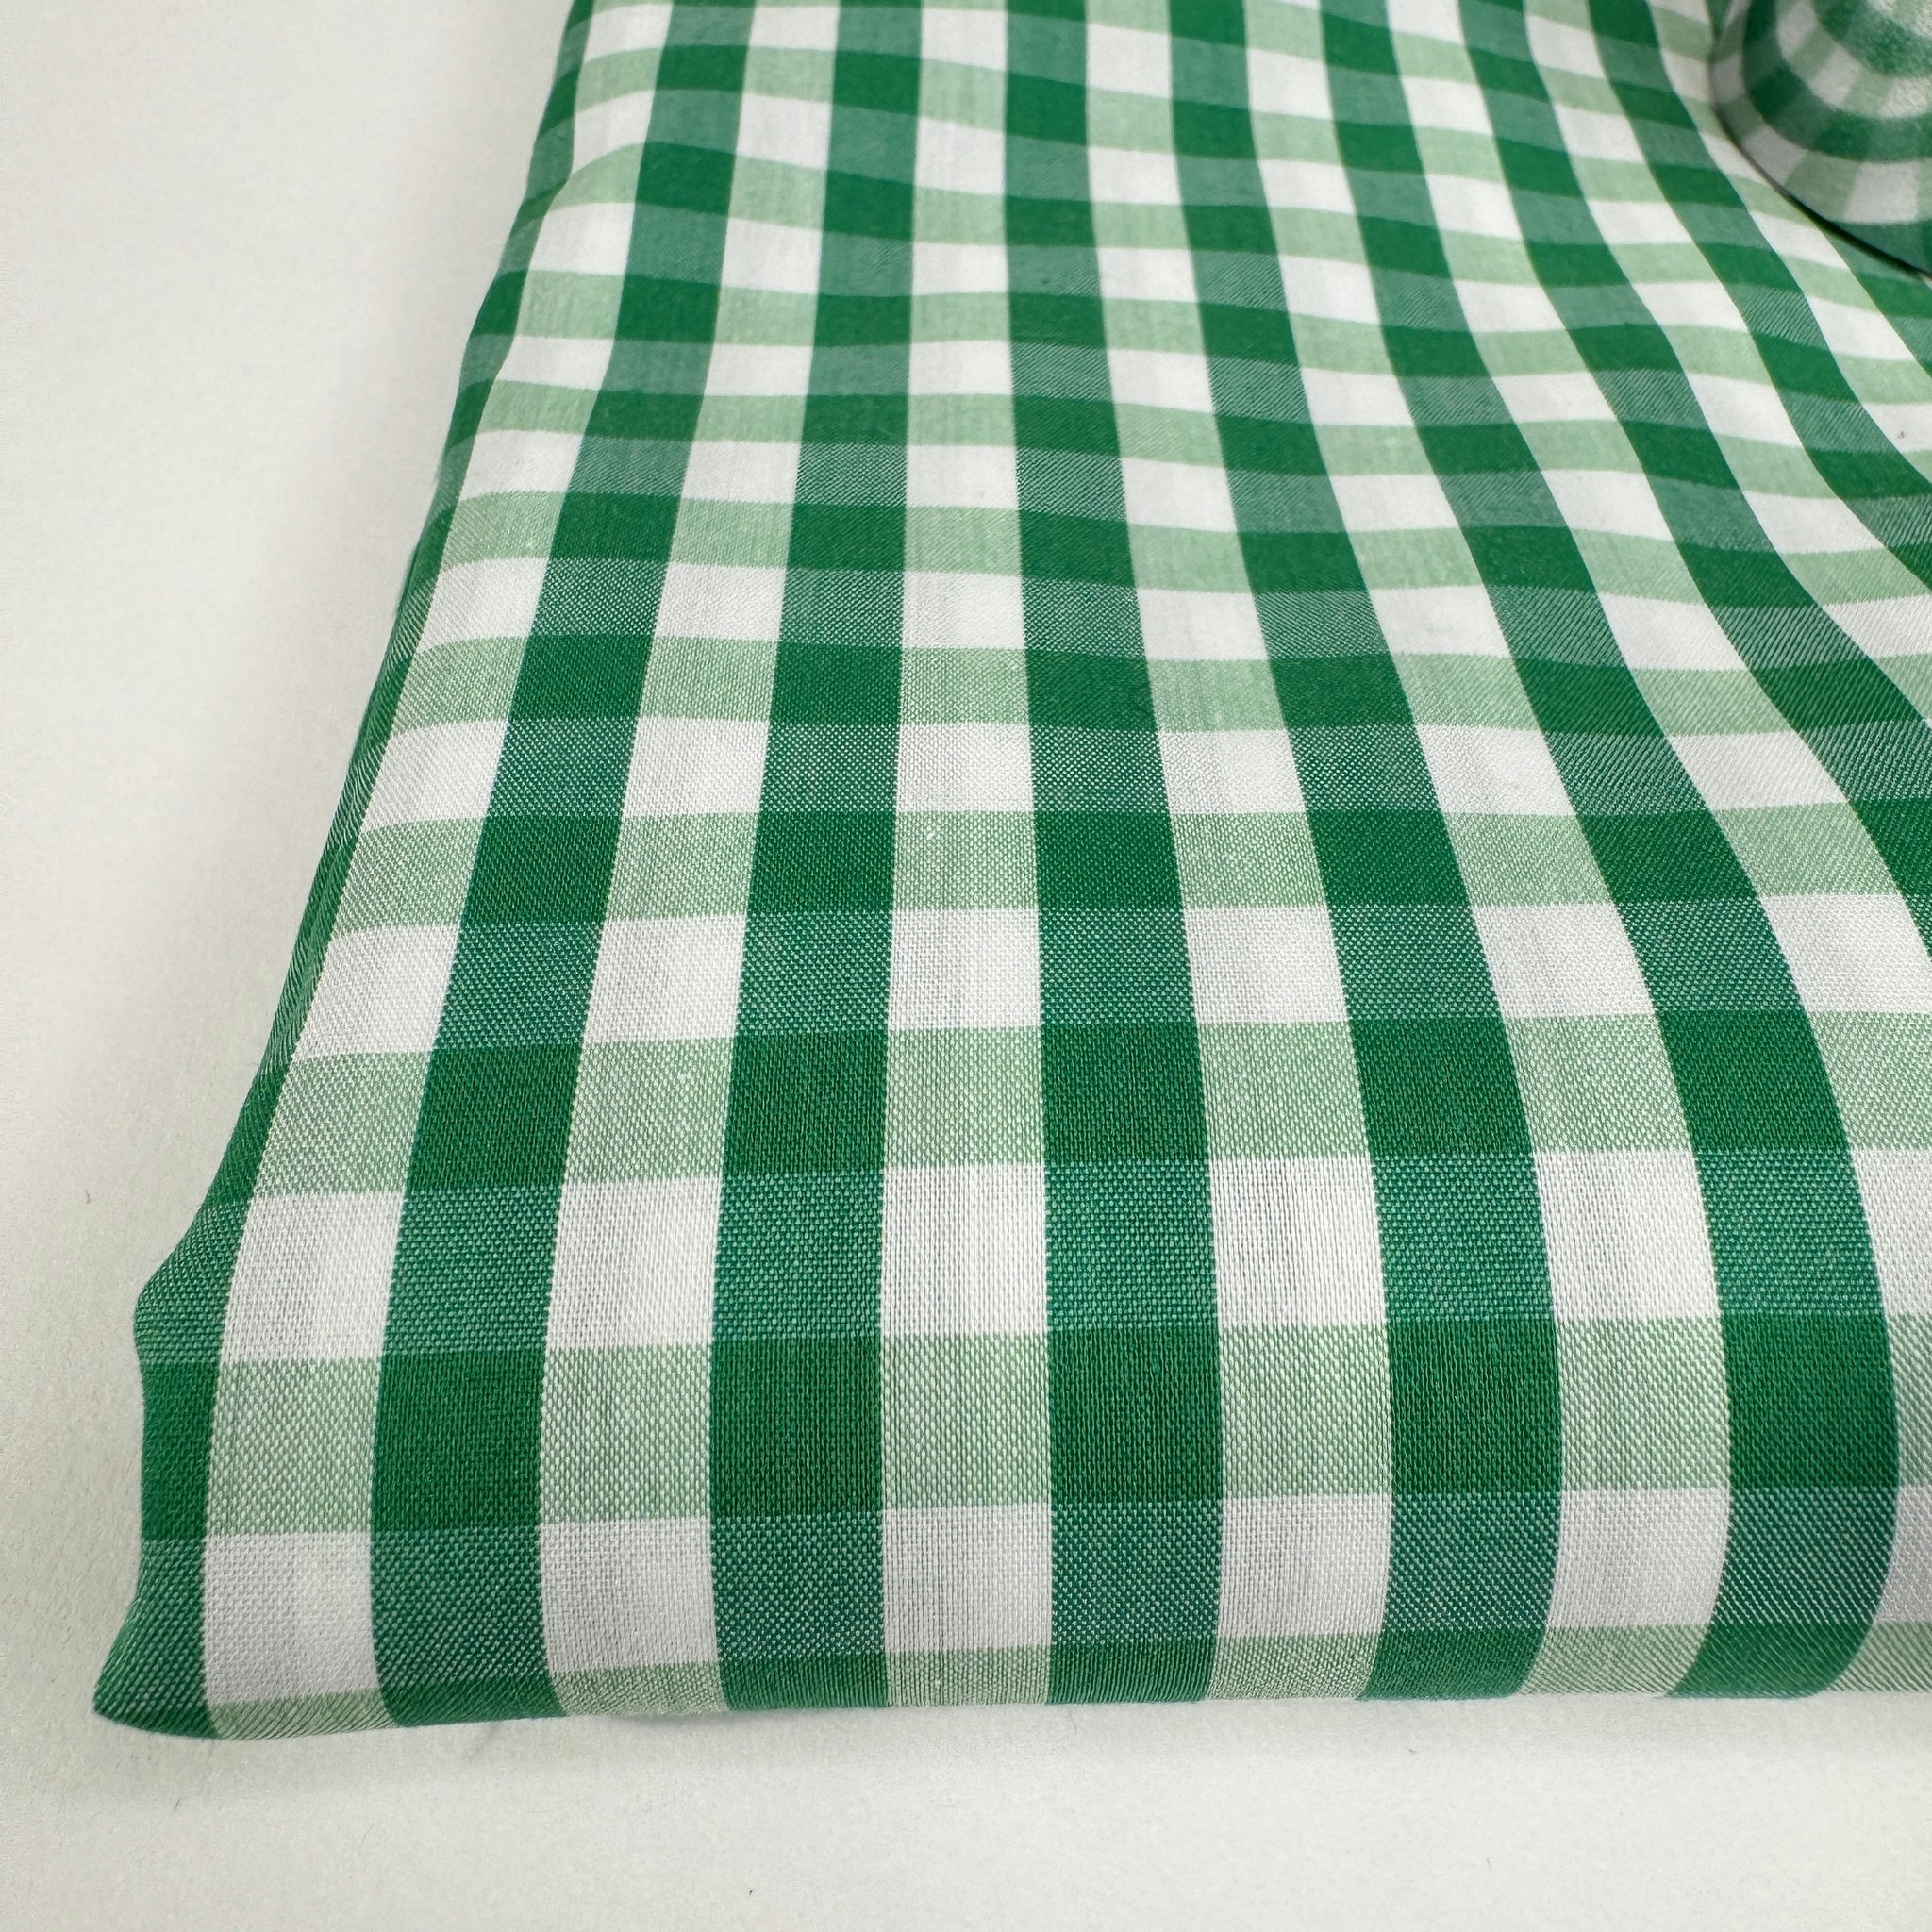 Bomull/elastan skjorttyg grön/vit rutig